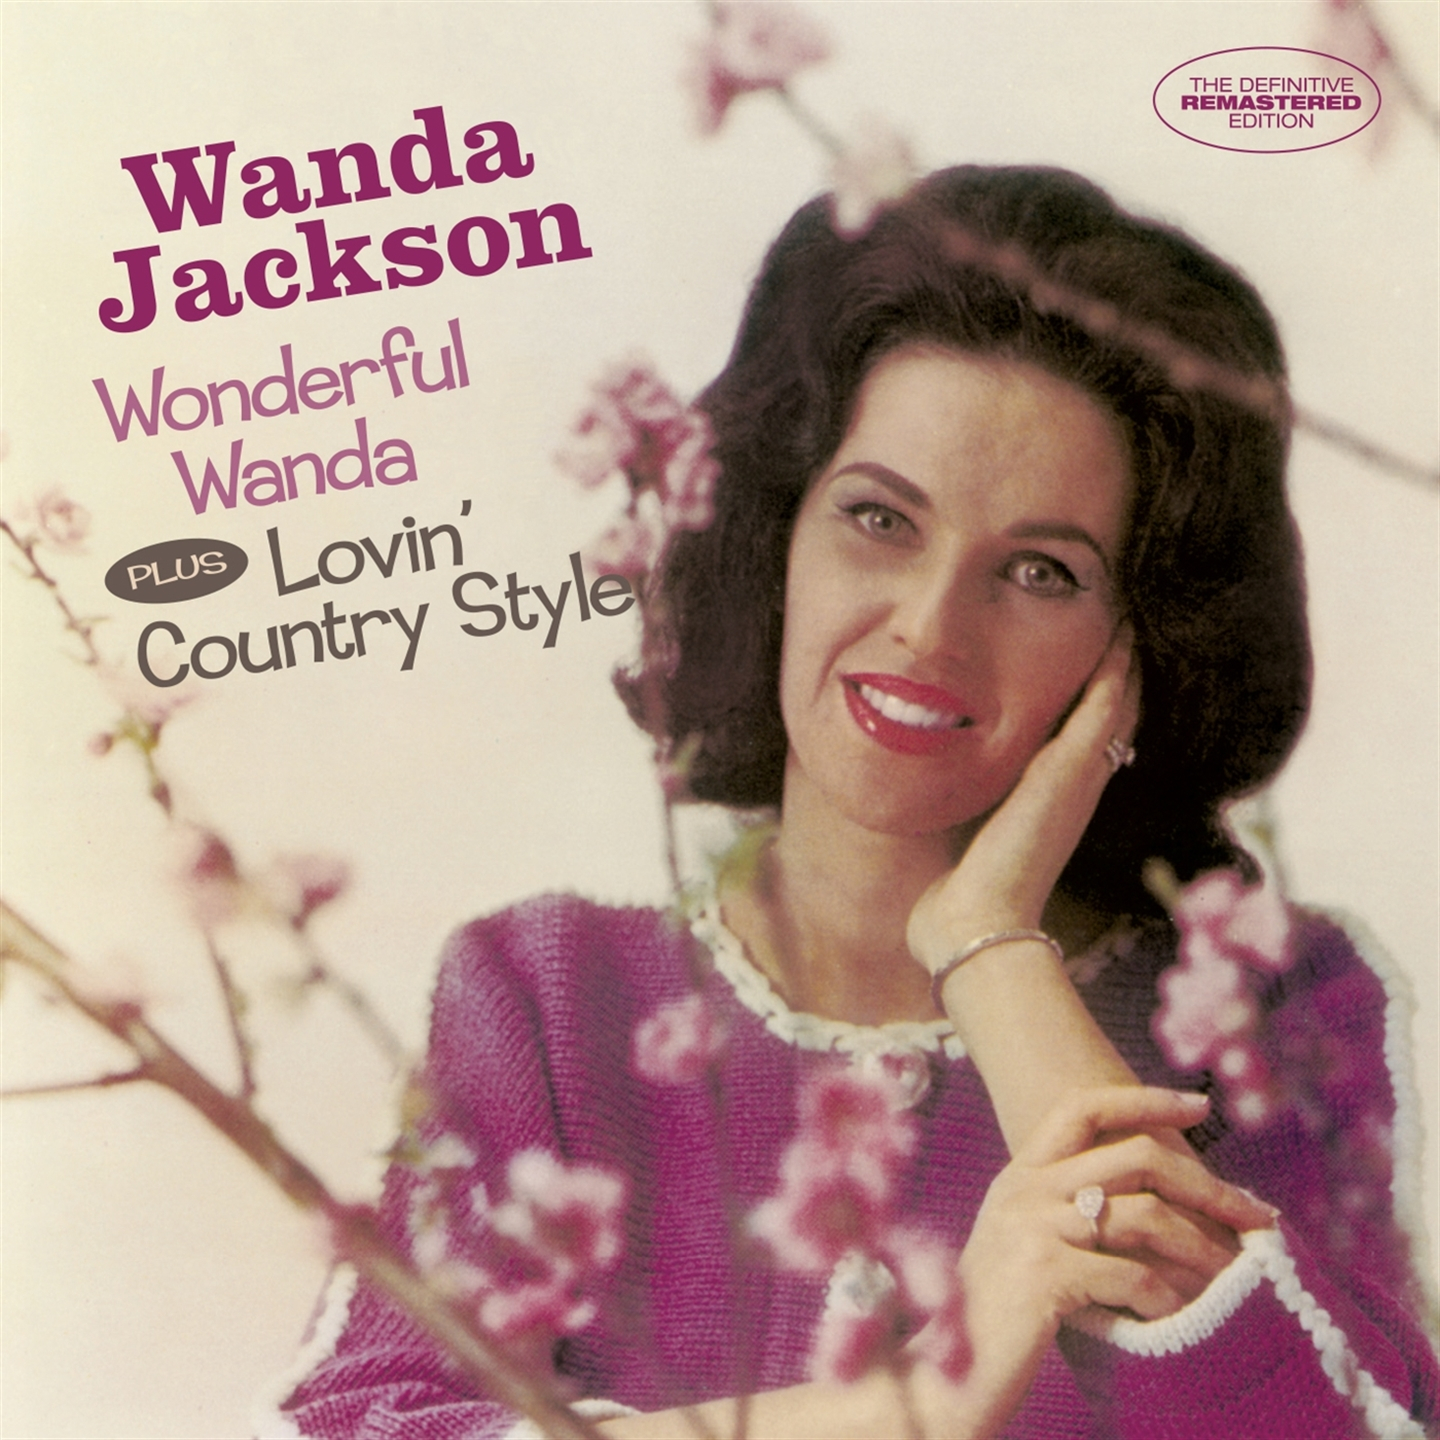 Wanda Jackson - Wonderful Wanda (+ Lovin' Country Style) - Photo 1/1